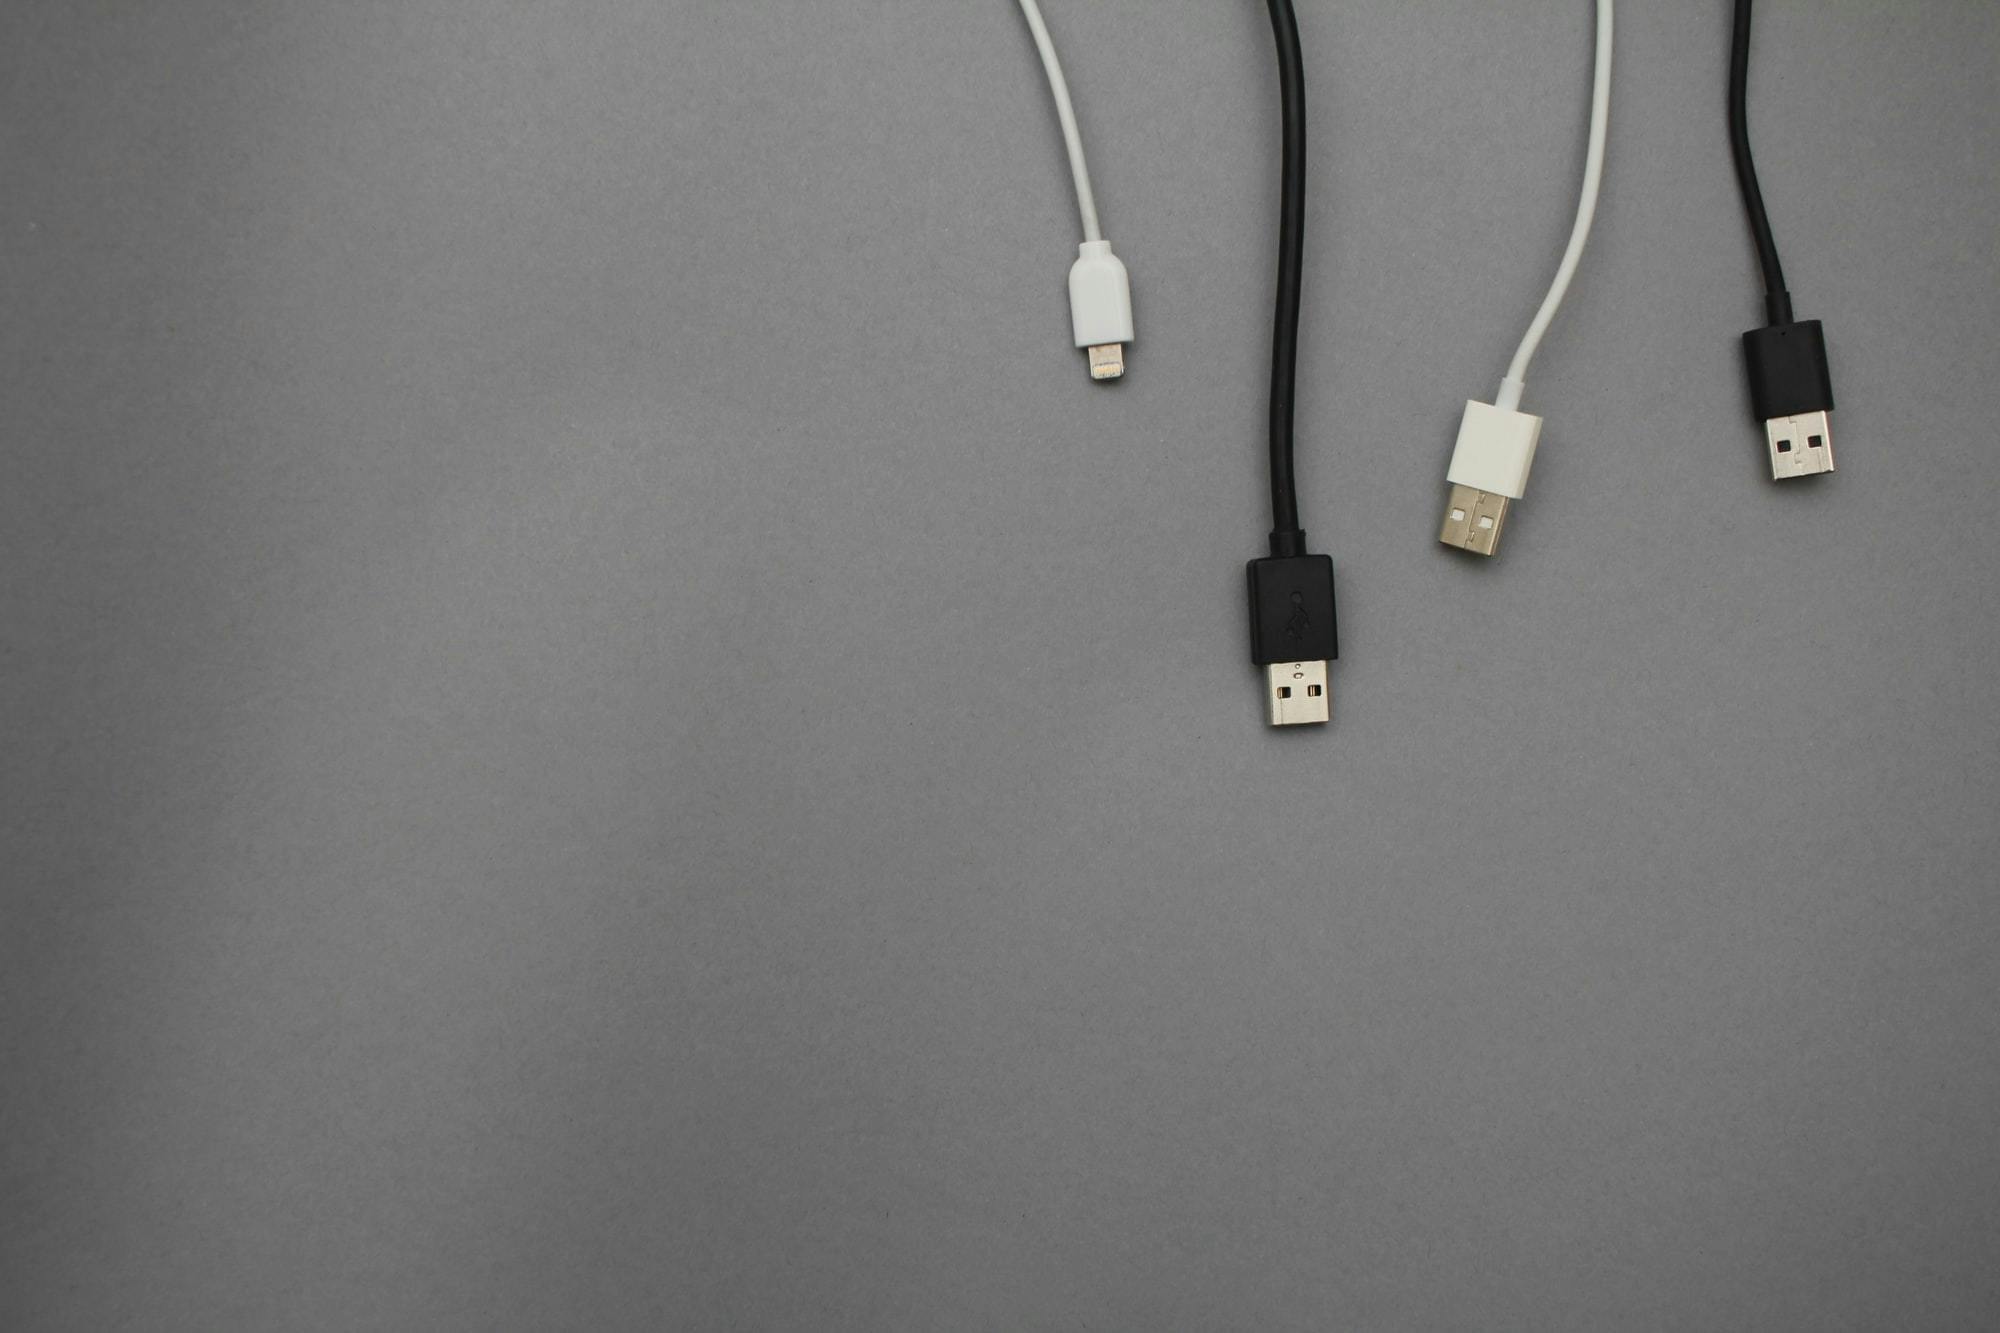 USB cables unsplash QM9yzAoX-GQ